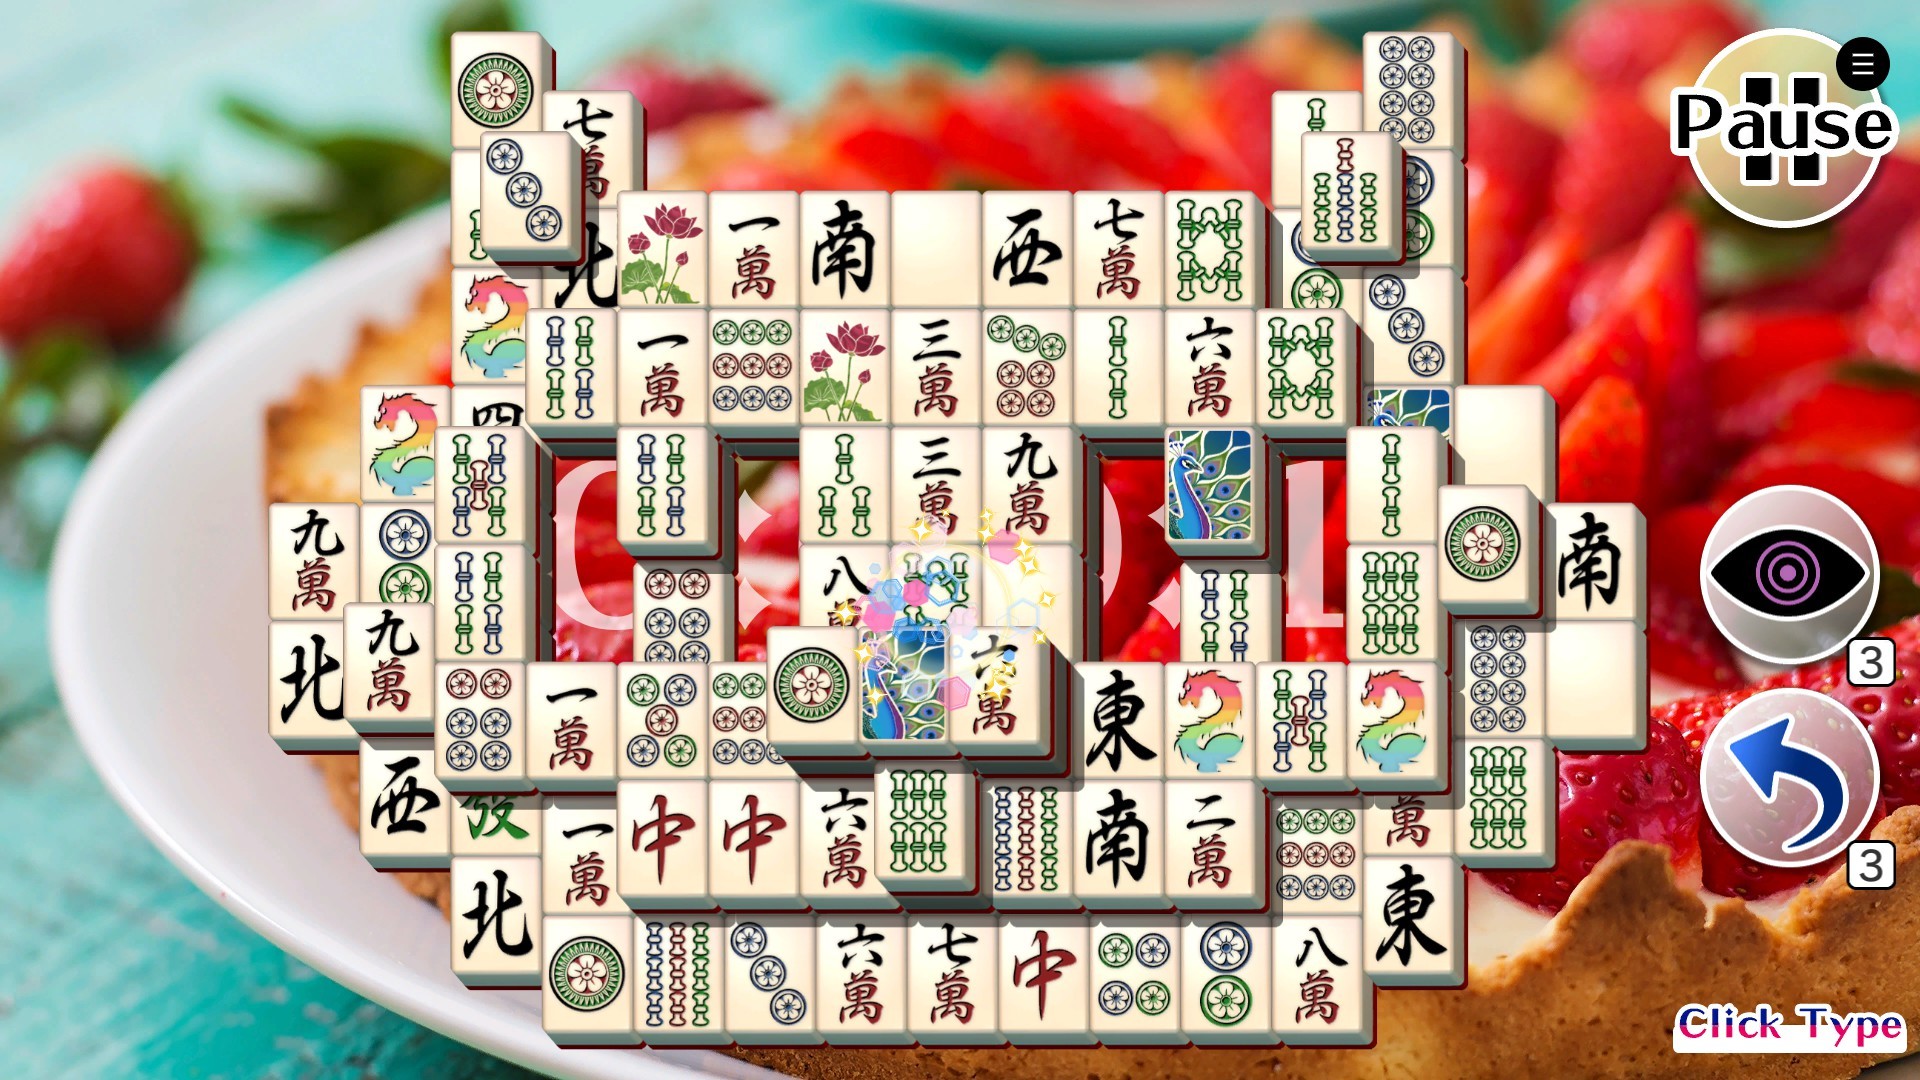 simple 2000 series portable the mahjong